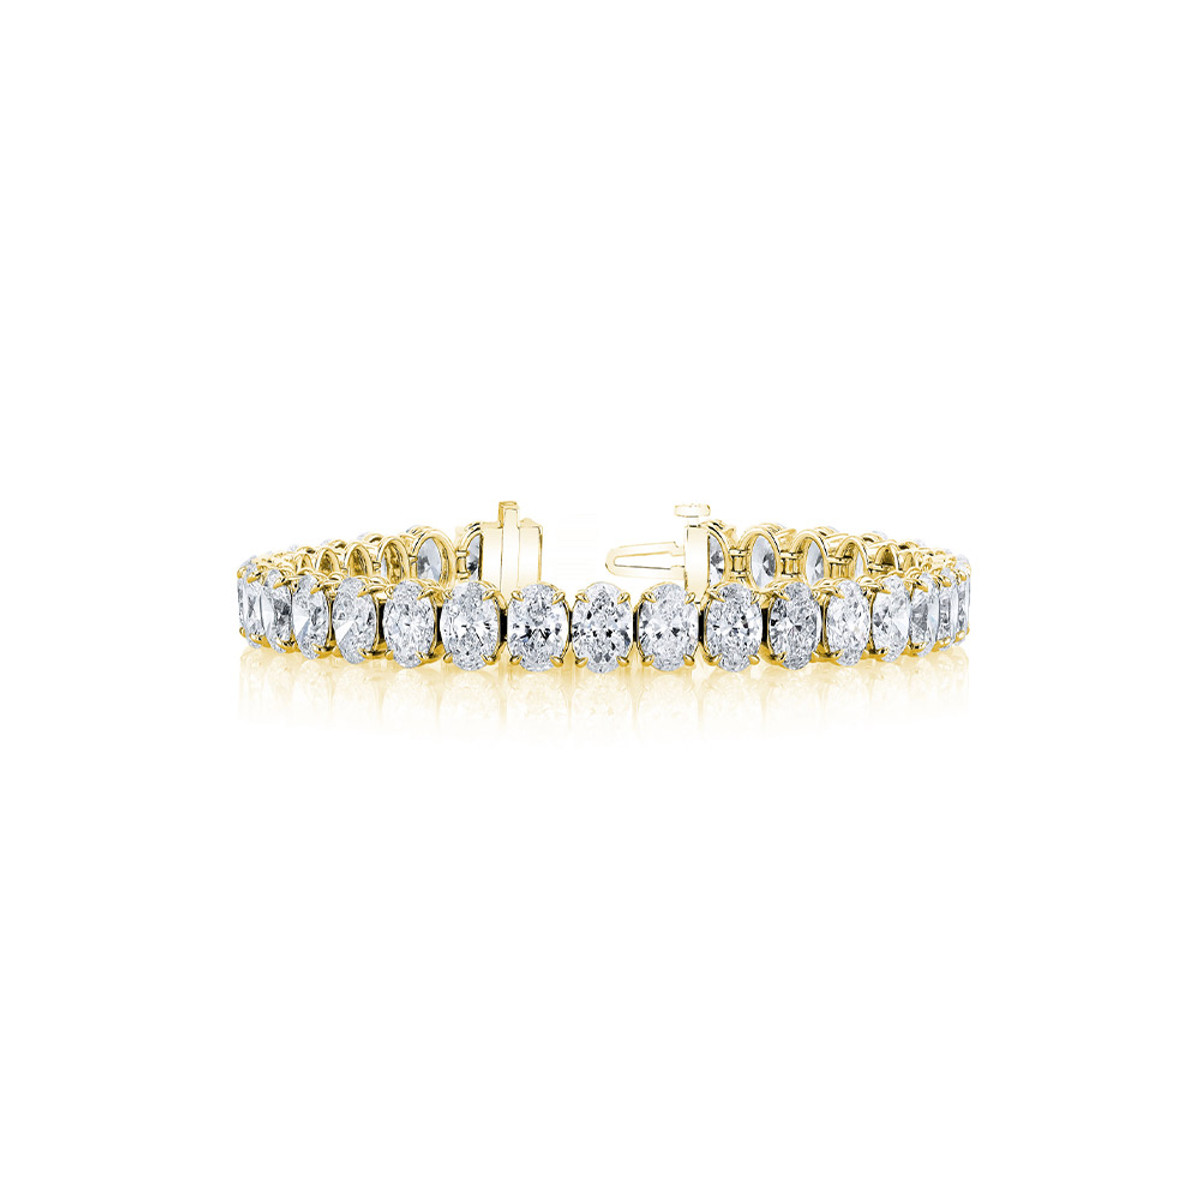 Hyde Park Collection 18K Yellow Gold Diamond Line Bracelet-59711